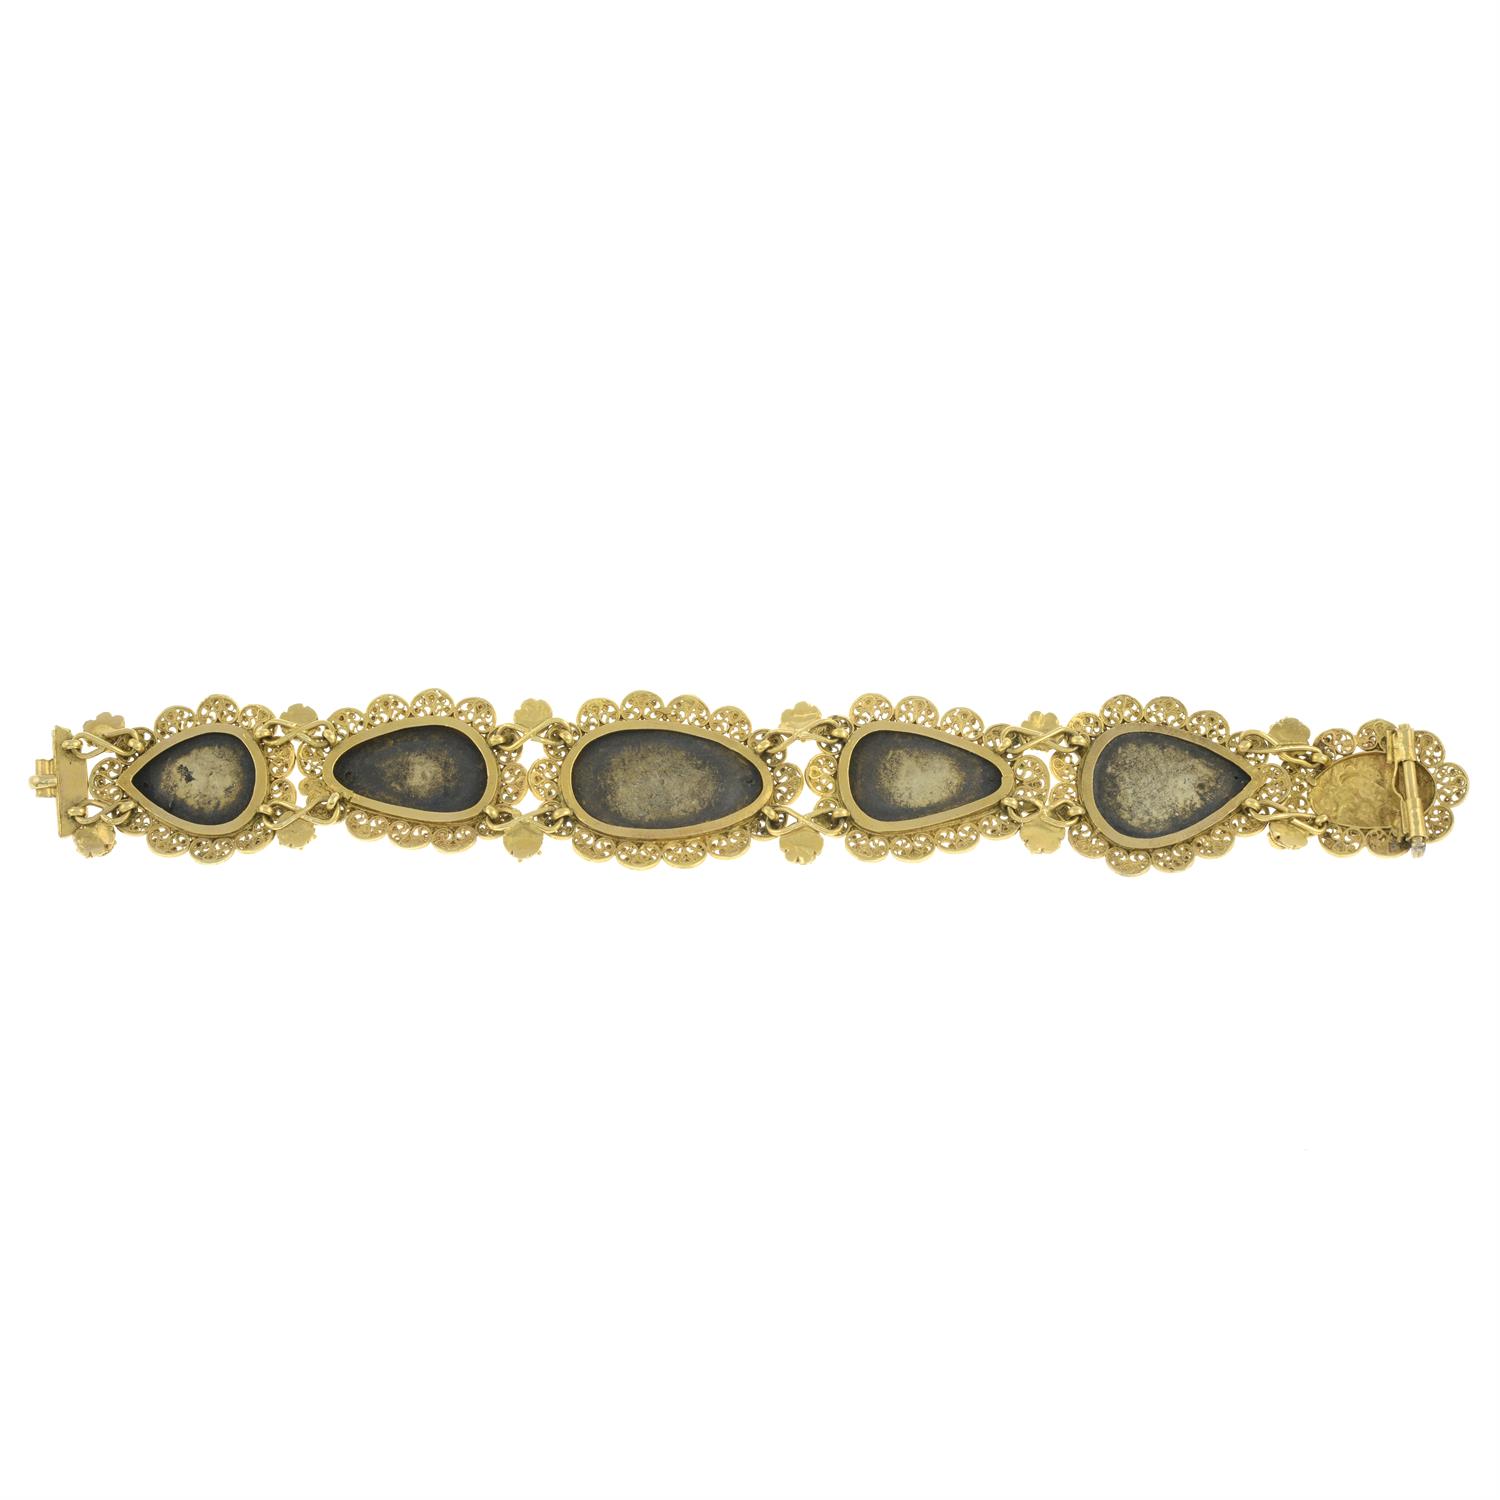 Carved turquoise bracelet - Image 5 of 5